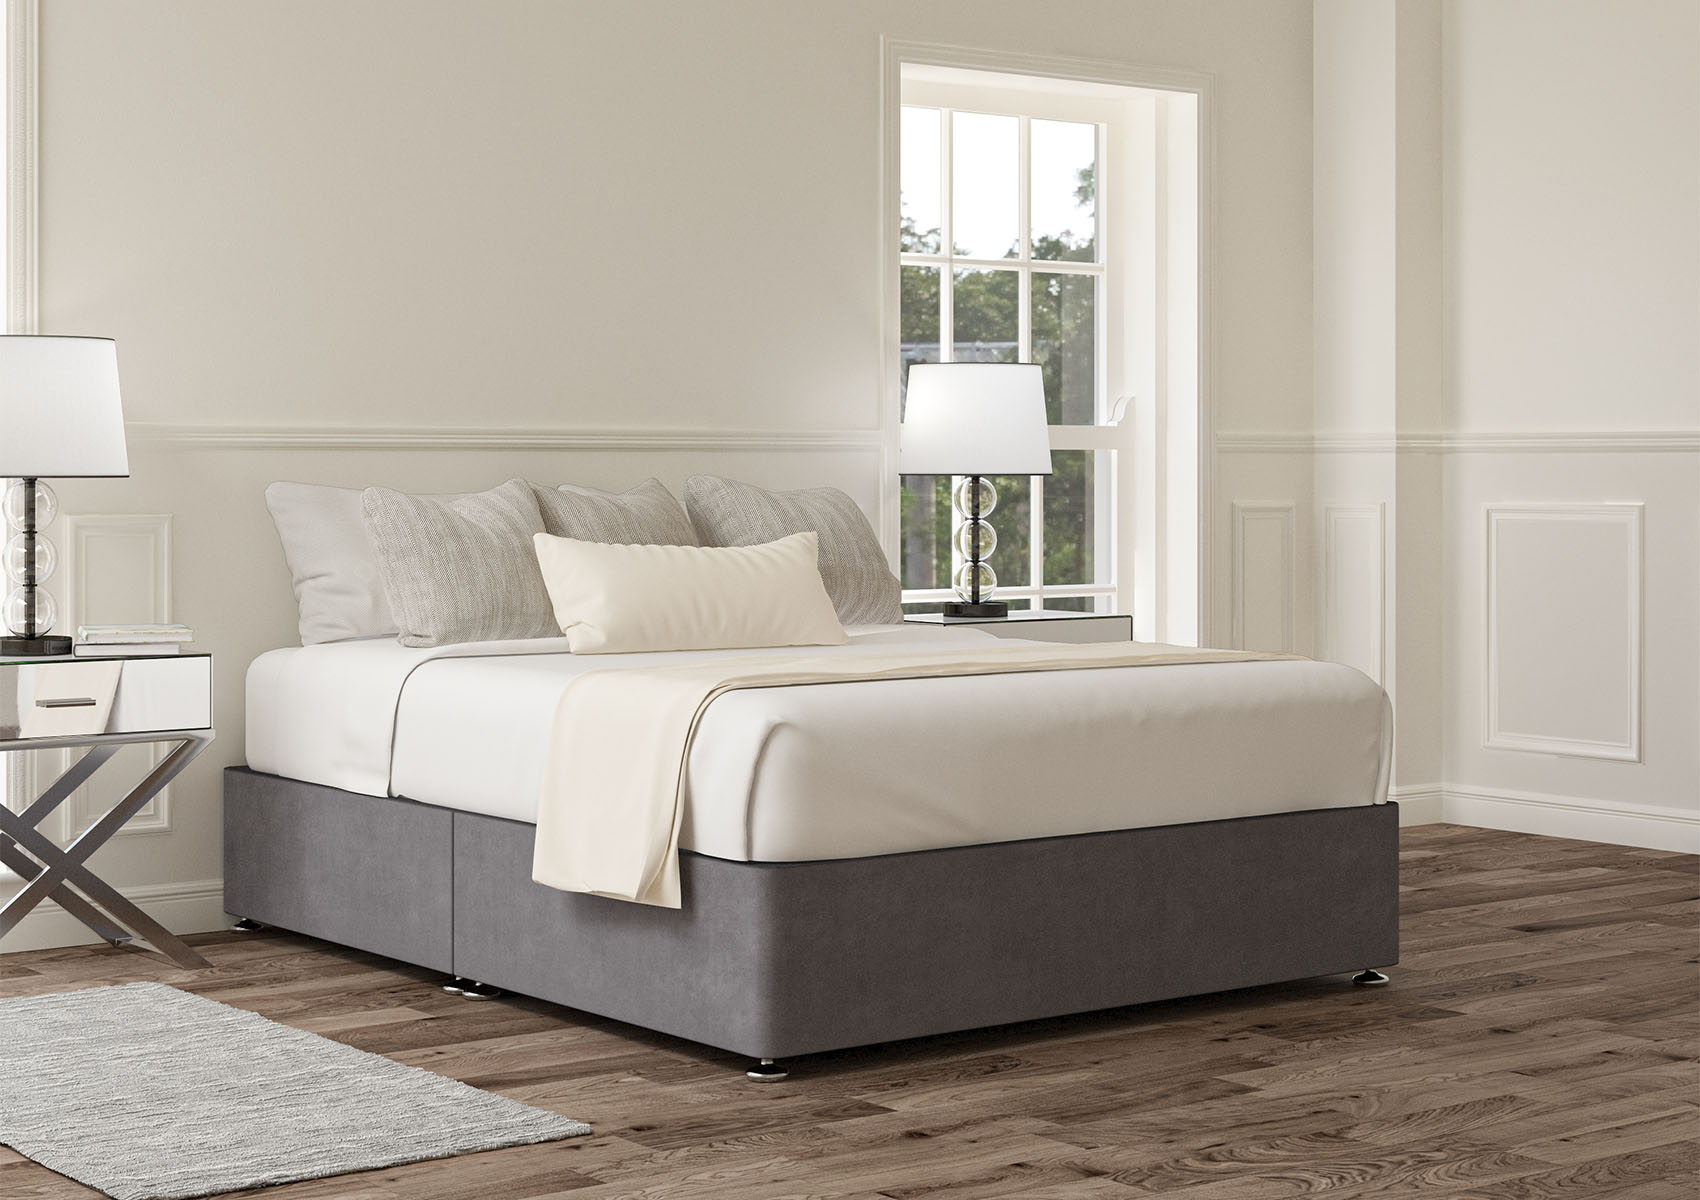 View Upholstered Plush Steel Upholstered Single Divan Bed Time4Sleep information